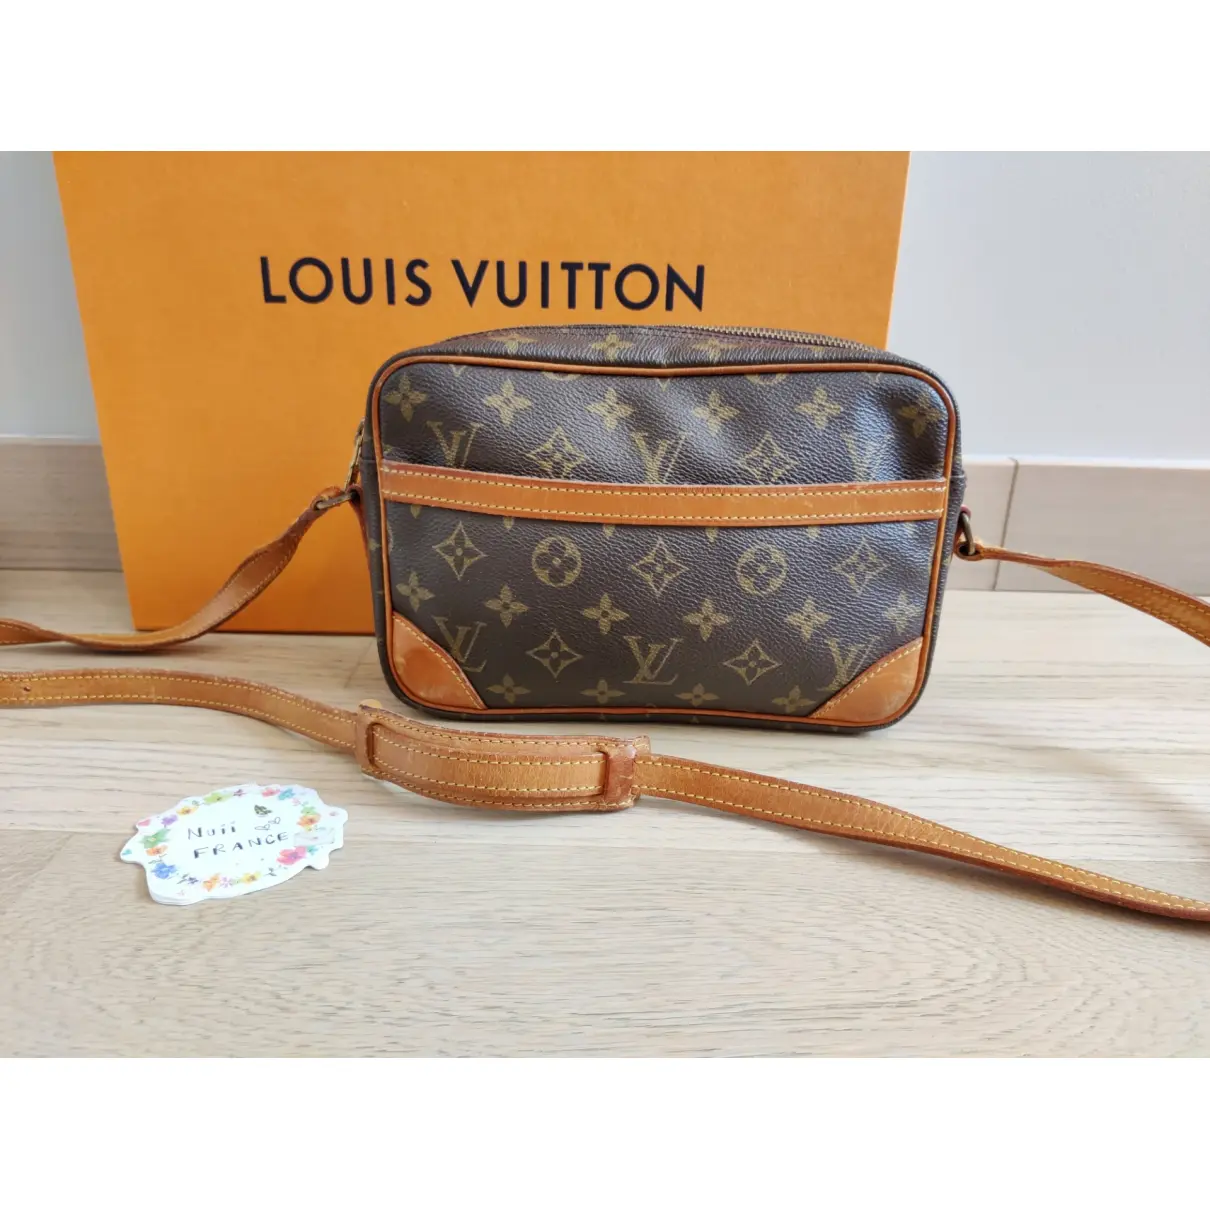 Buy Louis Vuitton Trocadéro leather crossbody bag online